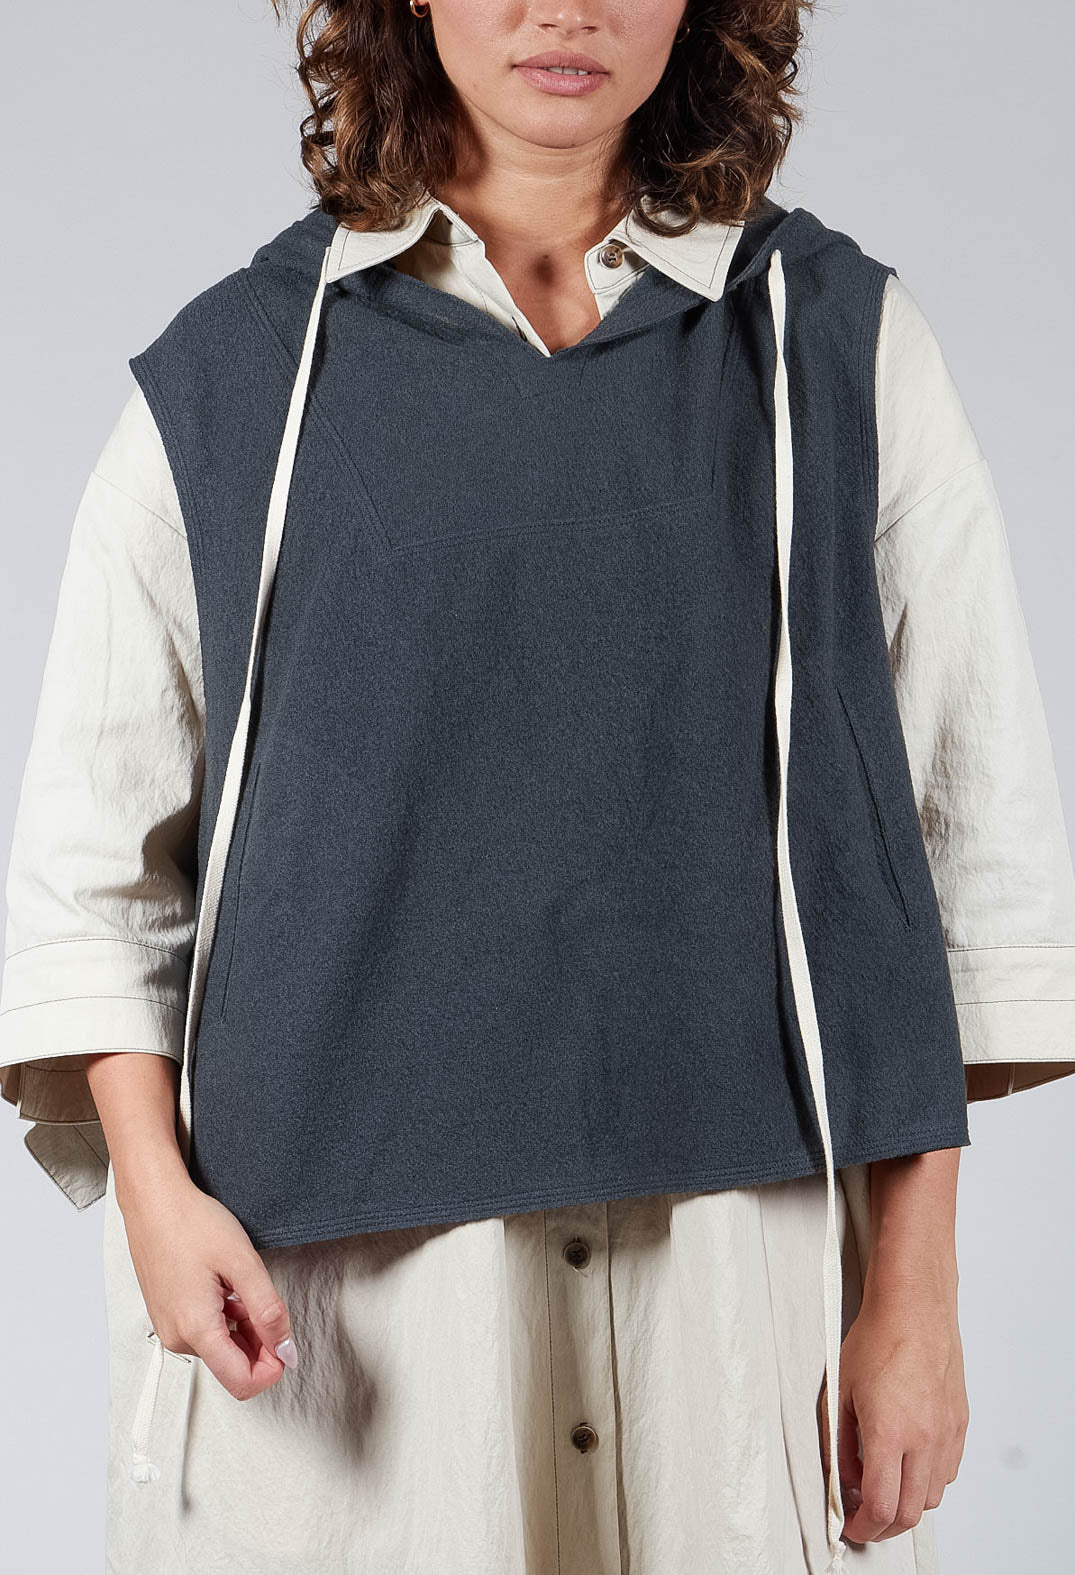 Sleeveless Basics Vest in Blue Grey